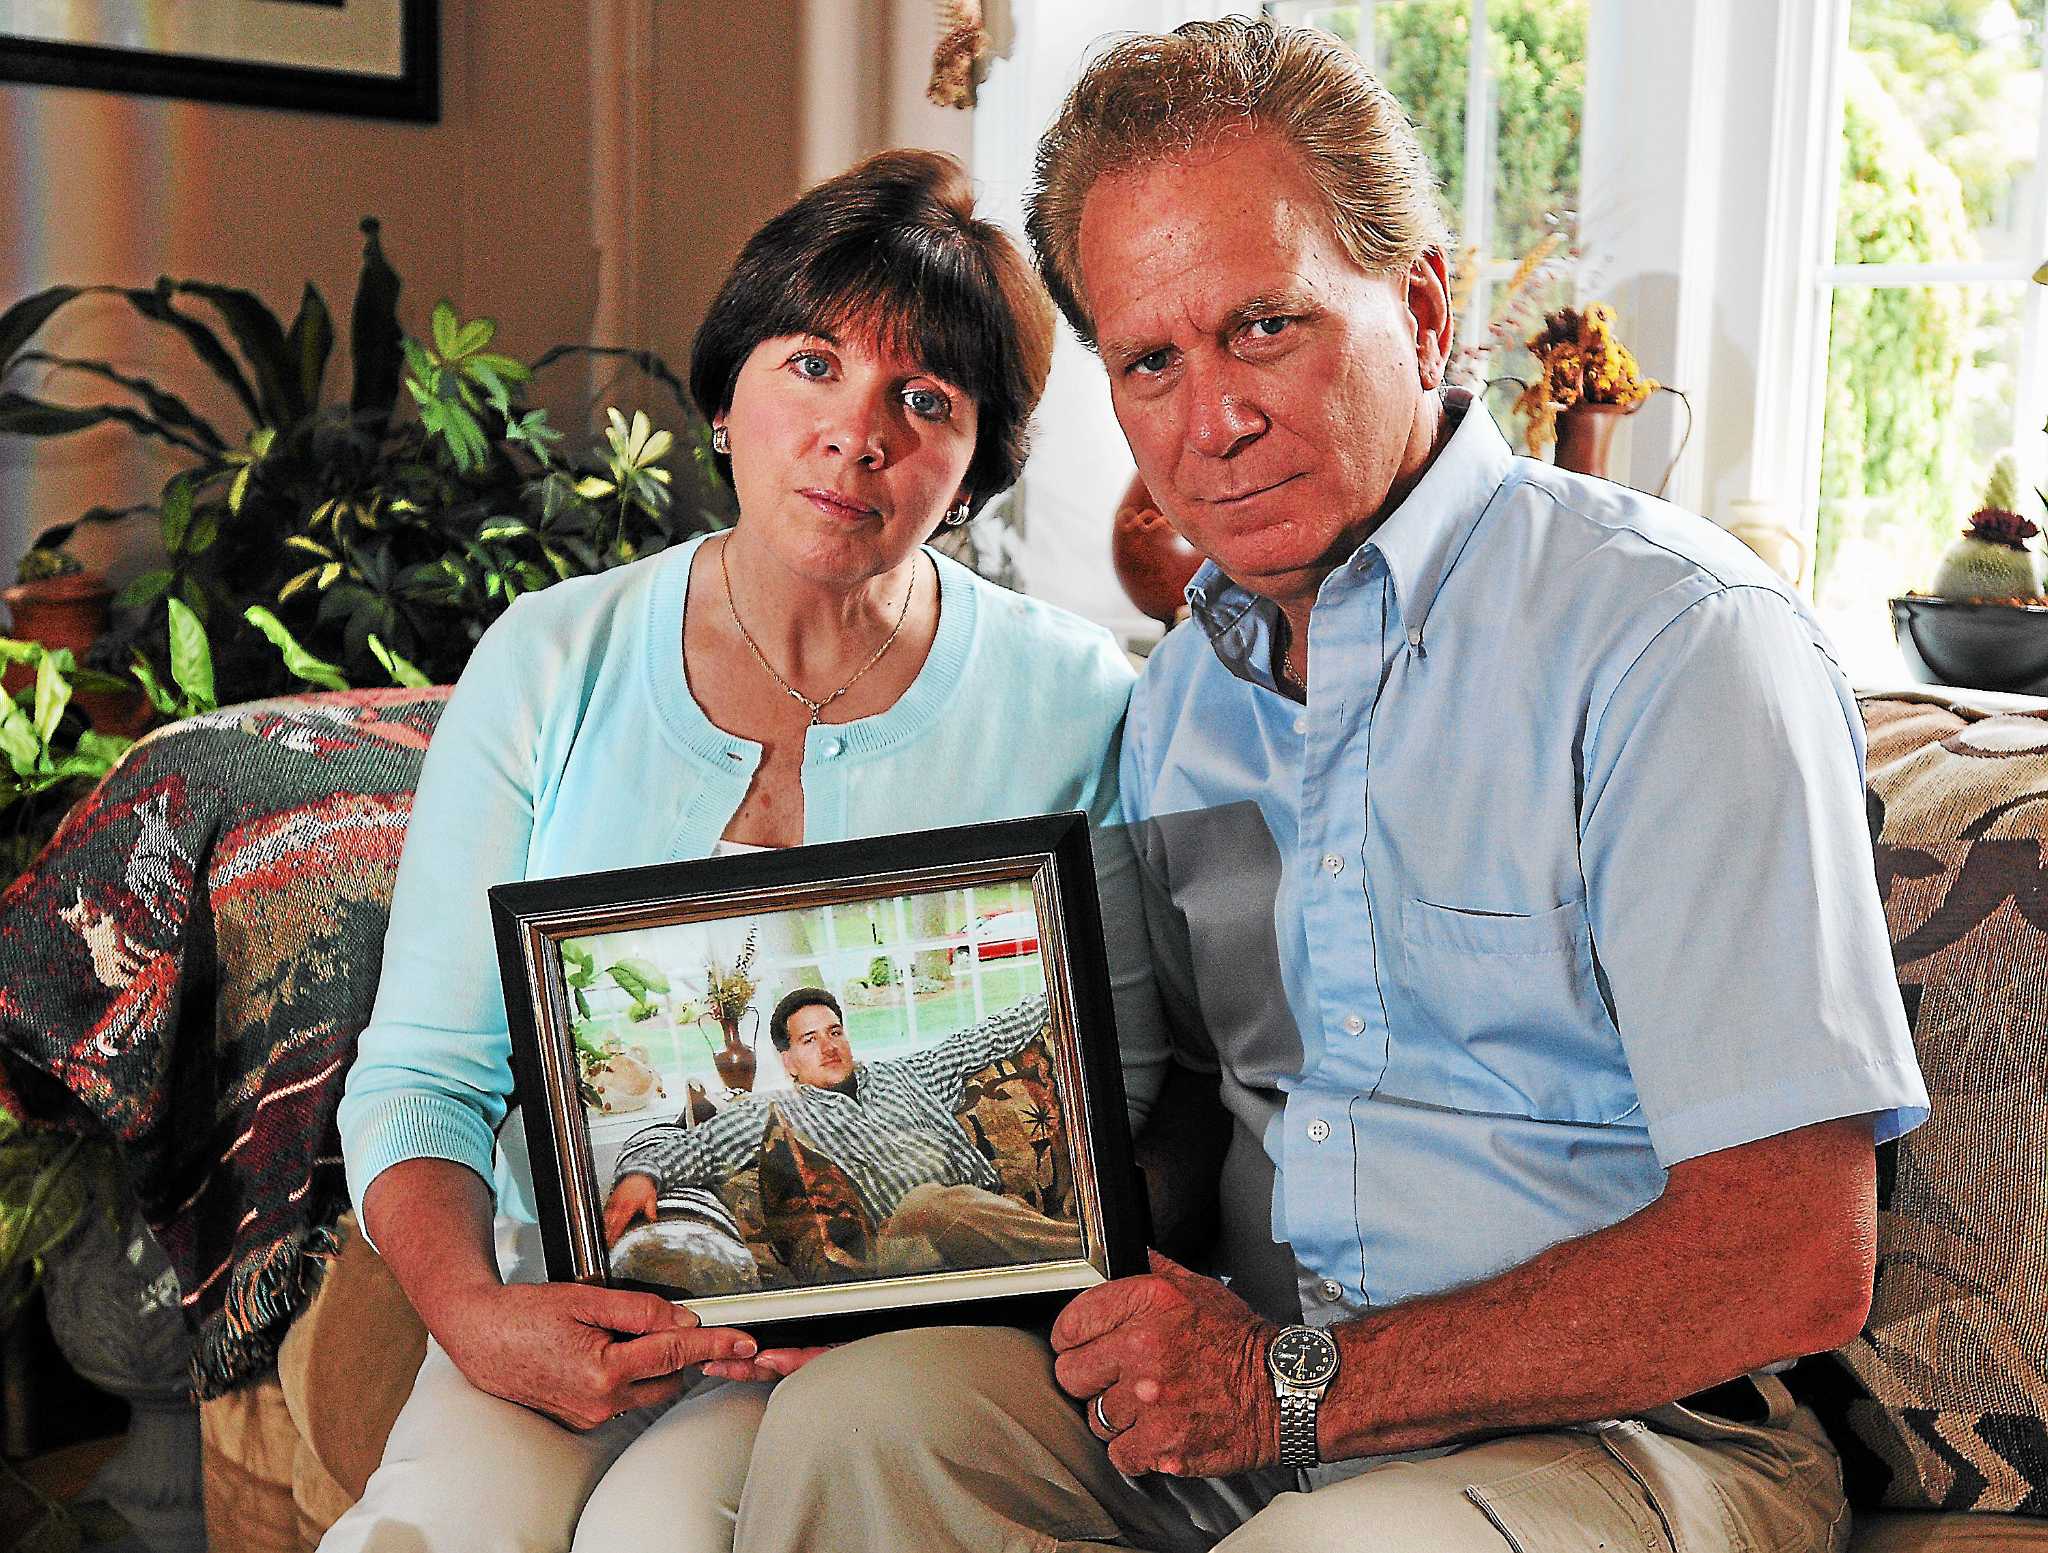 Family of missing Billy Smolinski Jr. loses court appeal in defamation case